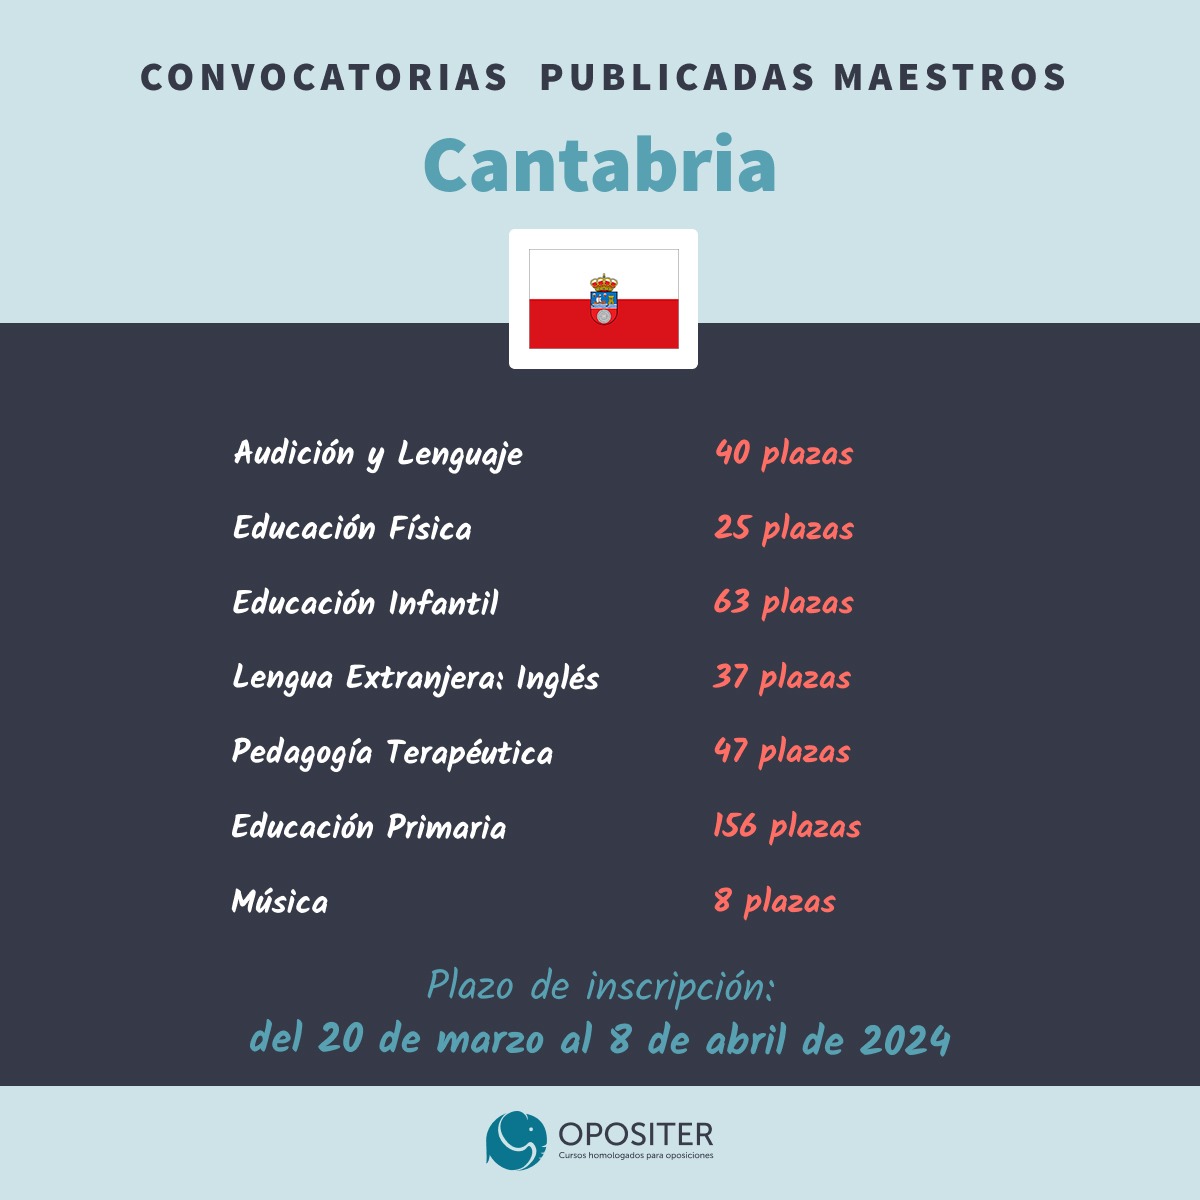 Convocatoria de Oposición para Maestros Cantabria